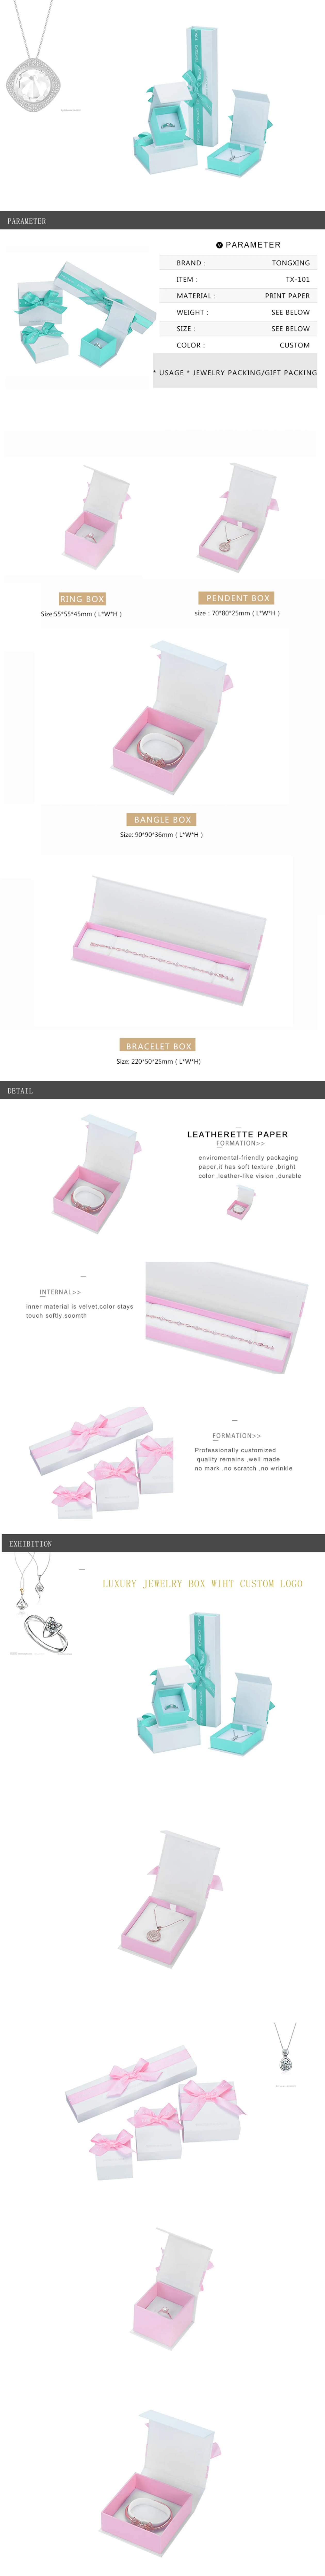 TX luxury packaging jewelry box kraft paper ring jewelry box packaging ribbon